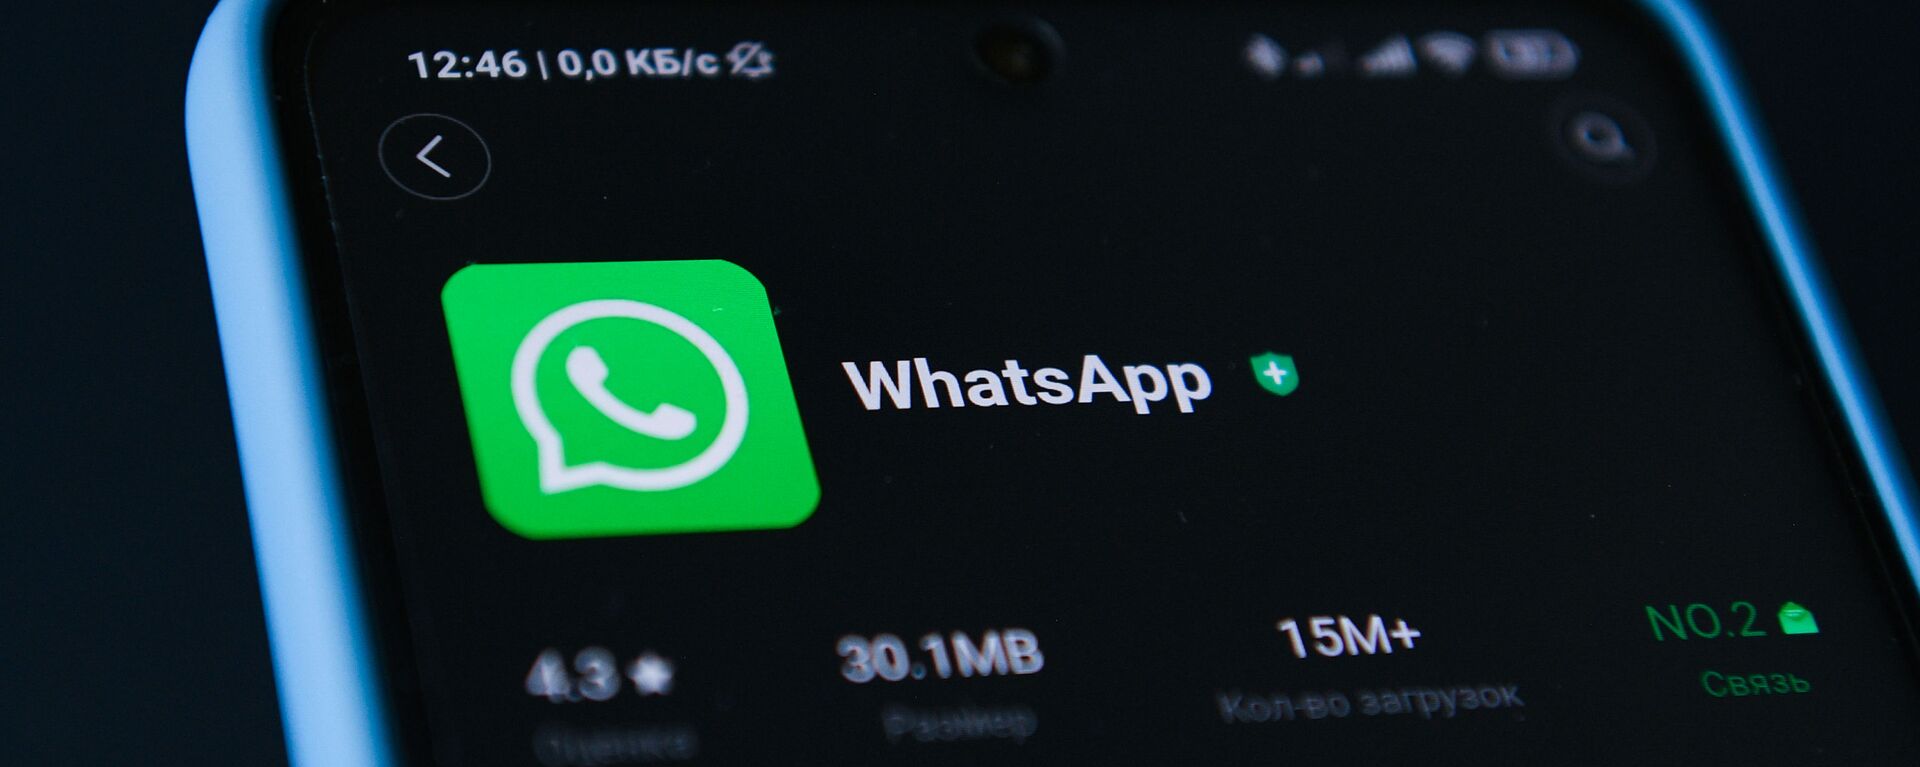 Иконка мессенджера WhatsApp на экране смартфона. - Sputnik Абхазия, 1920, 18.04.2021